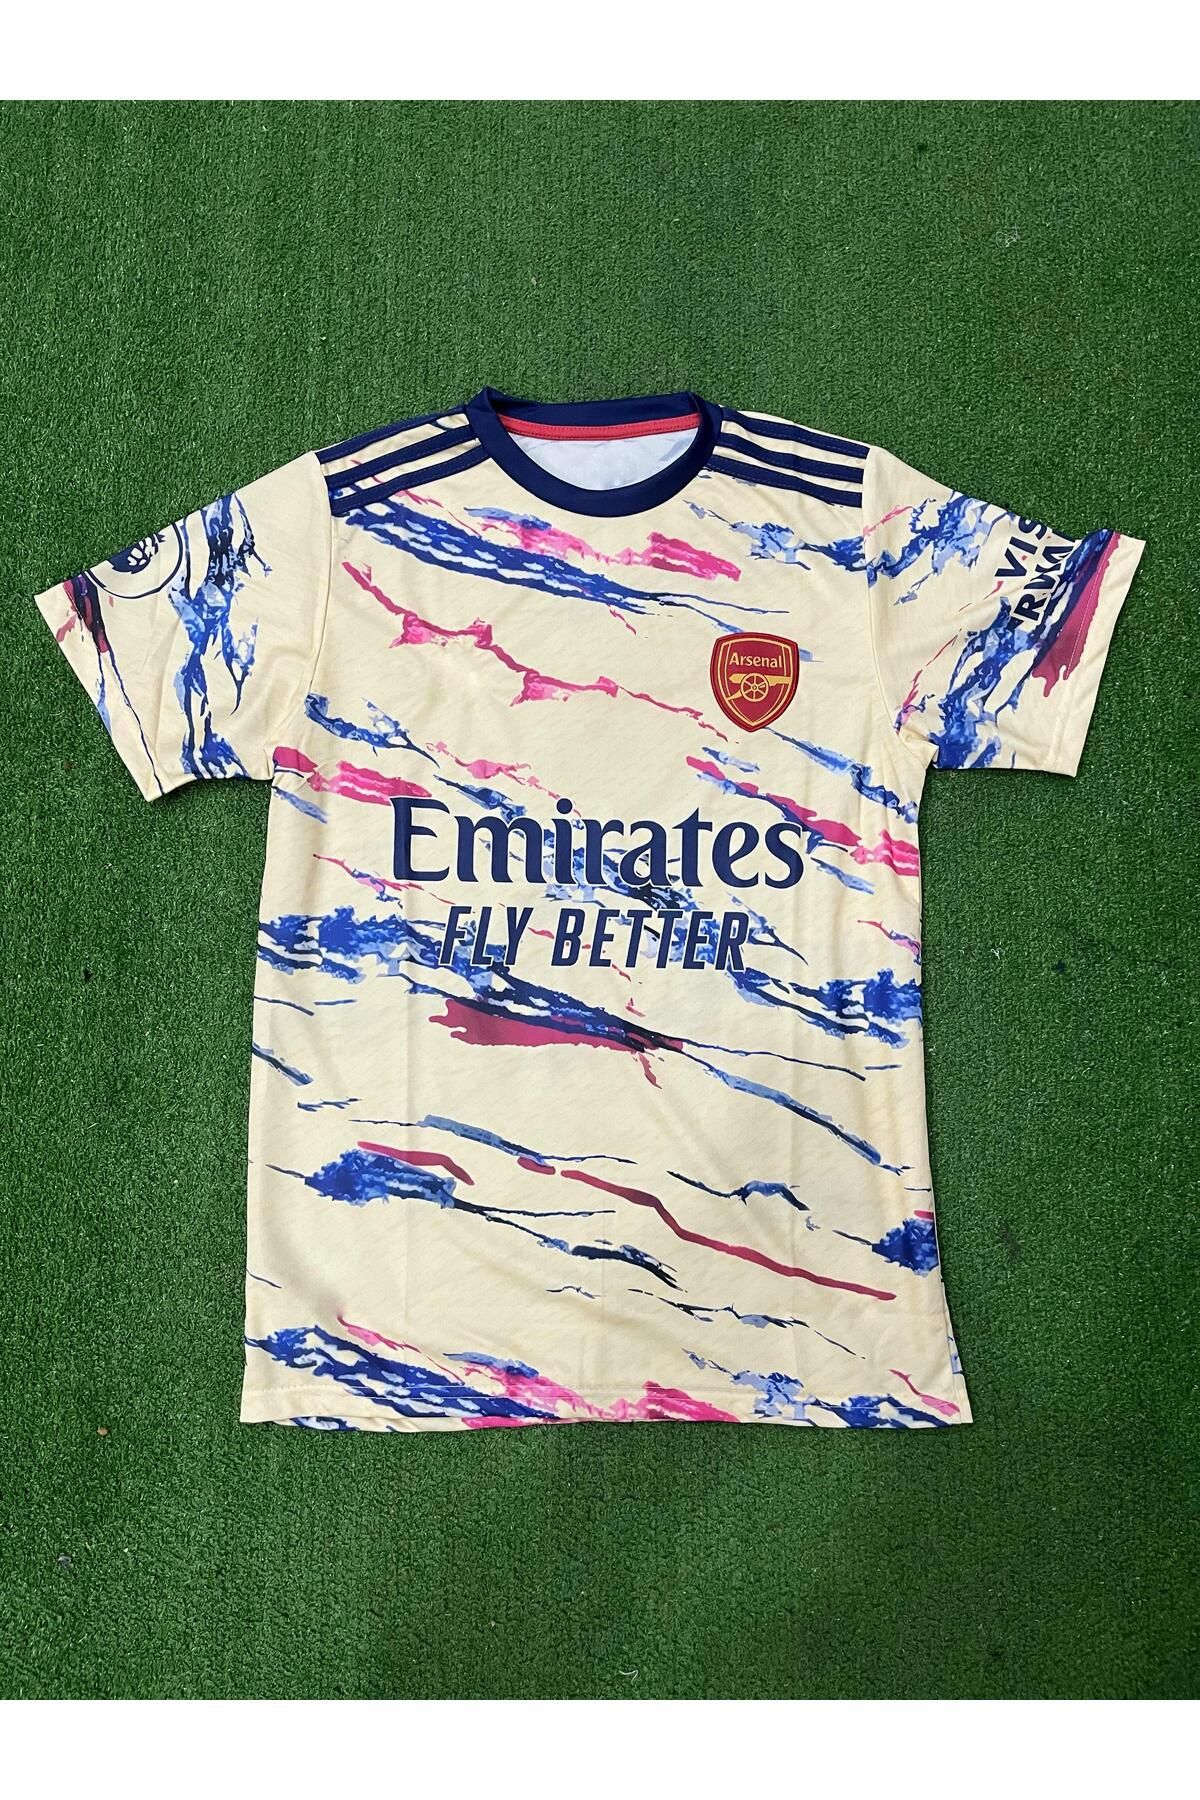 İeys Sport Arsenal Özel Tasarım Isimsiz Forma / Special Edition Jersey